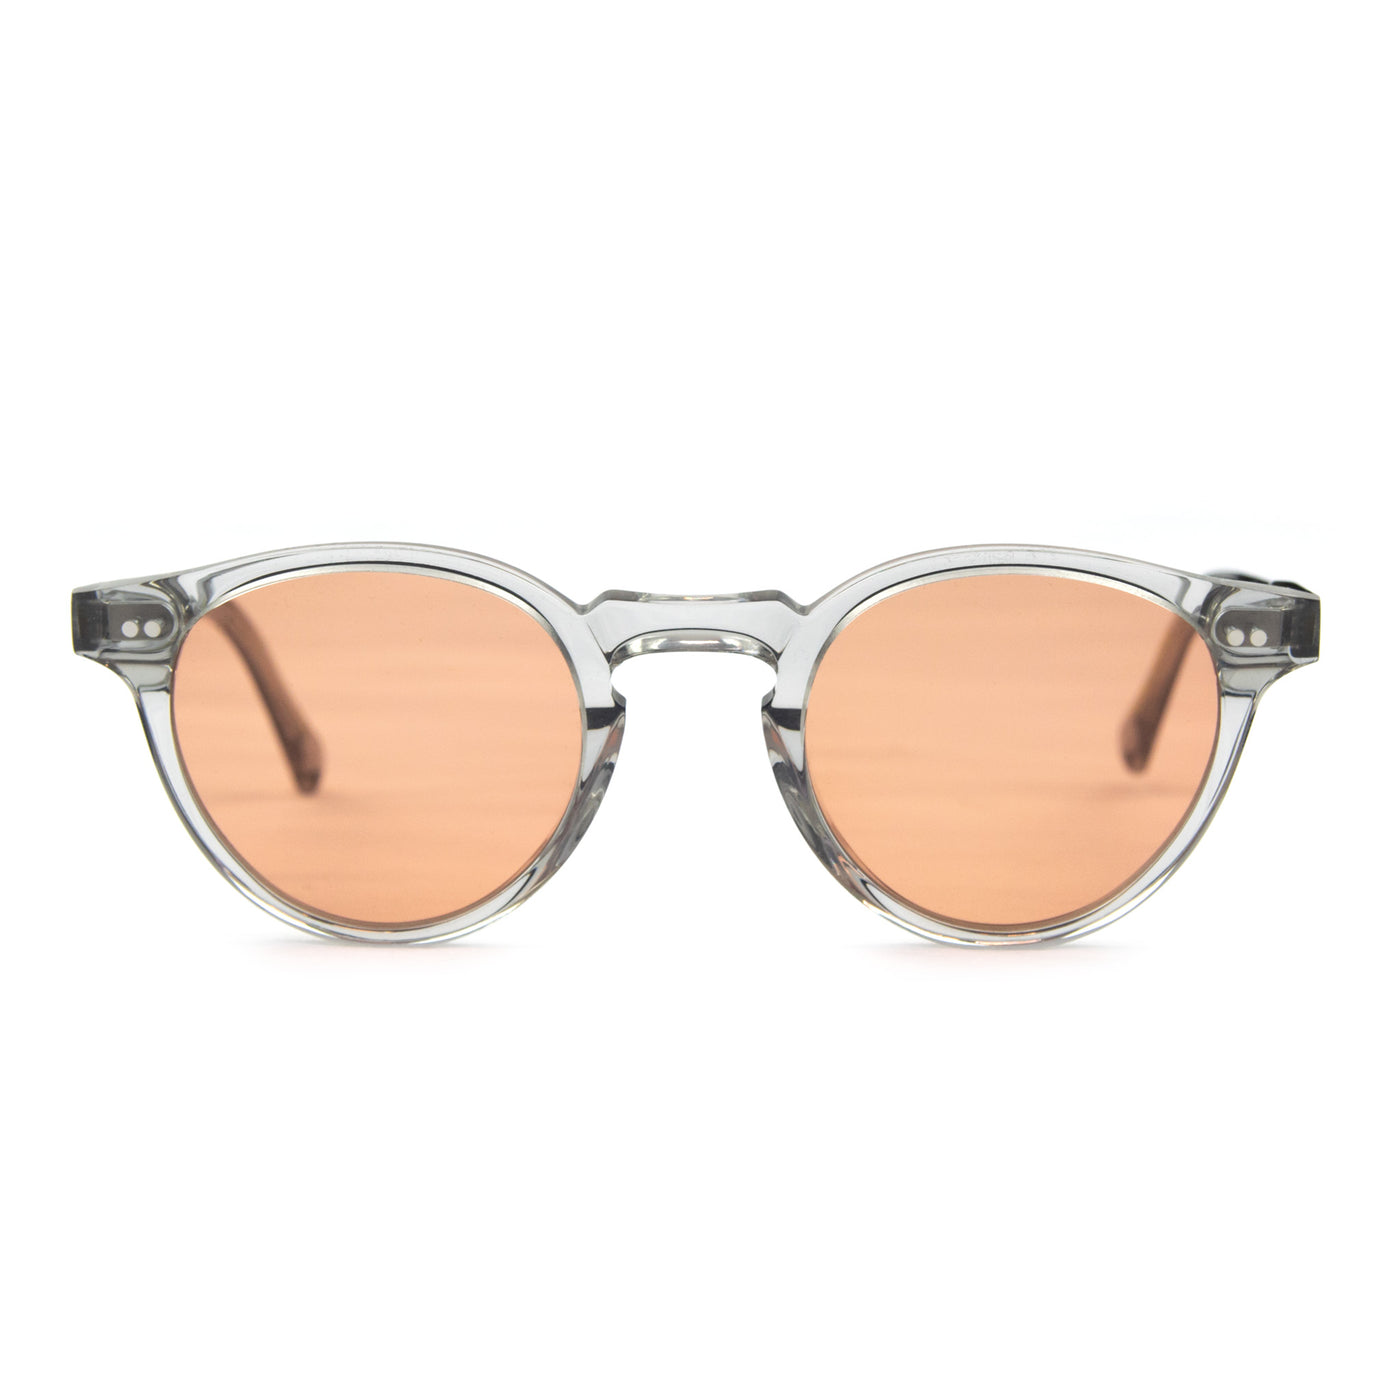 Monokel Forest Grey Sunglasses Orange Solid Lens Front